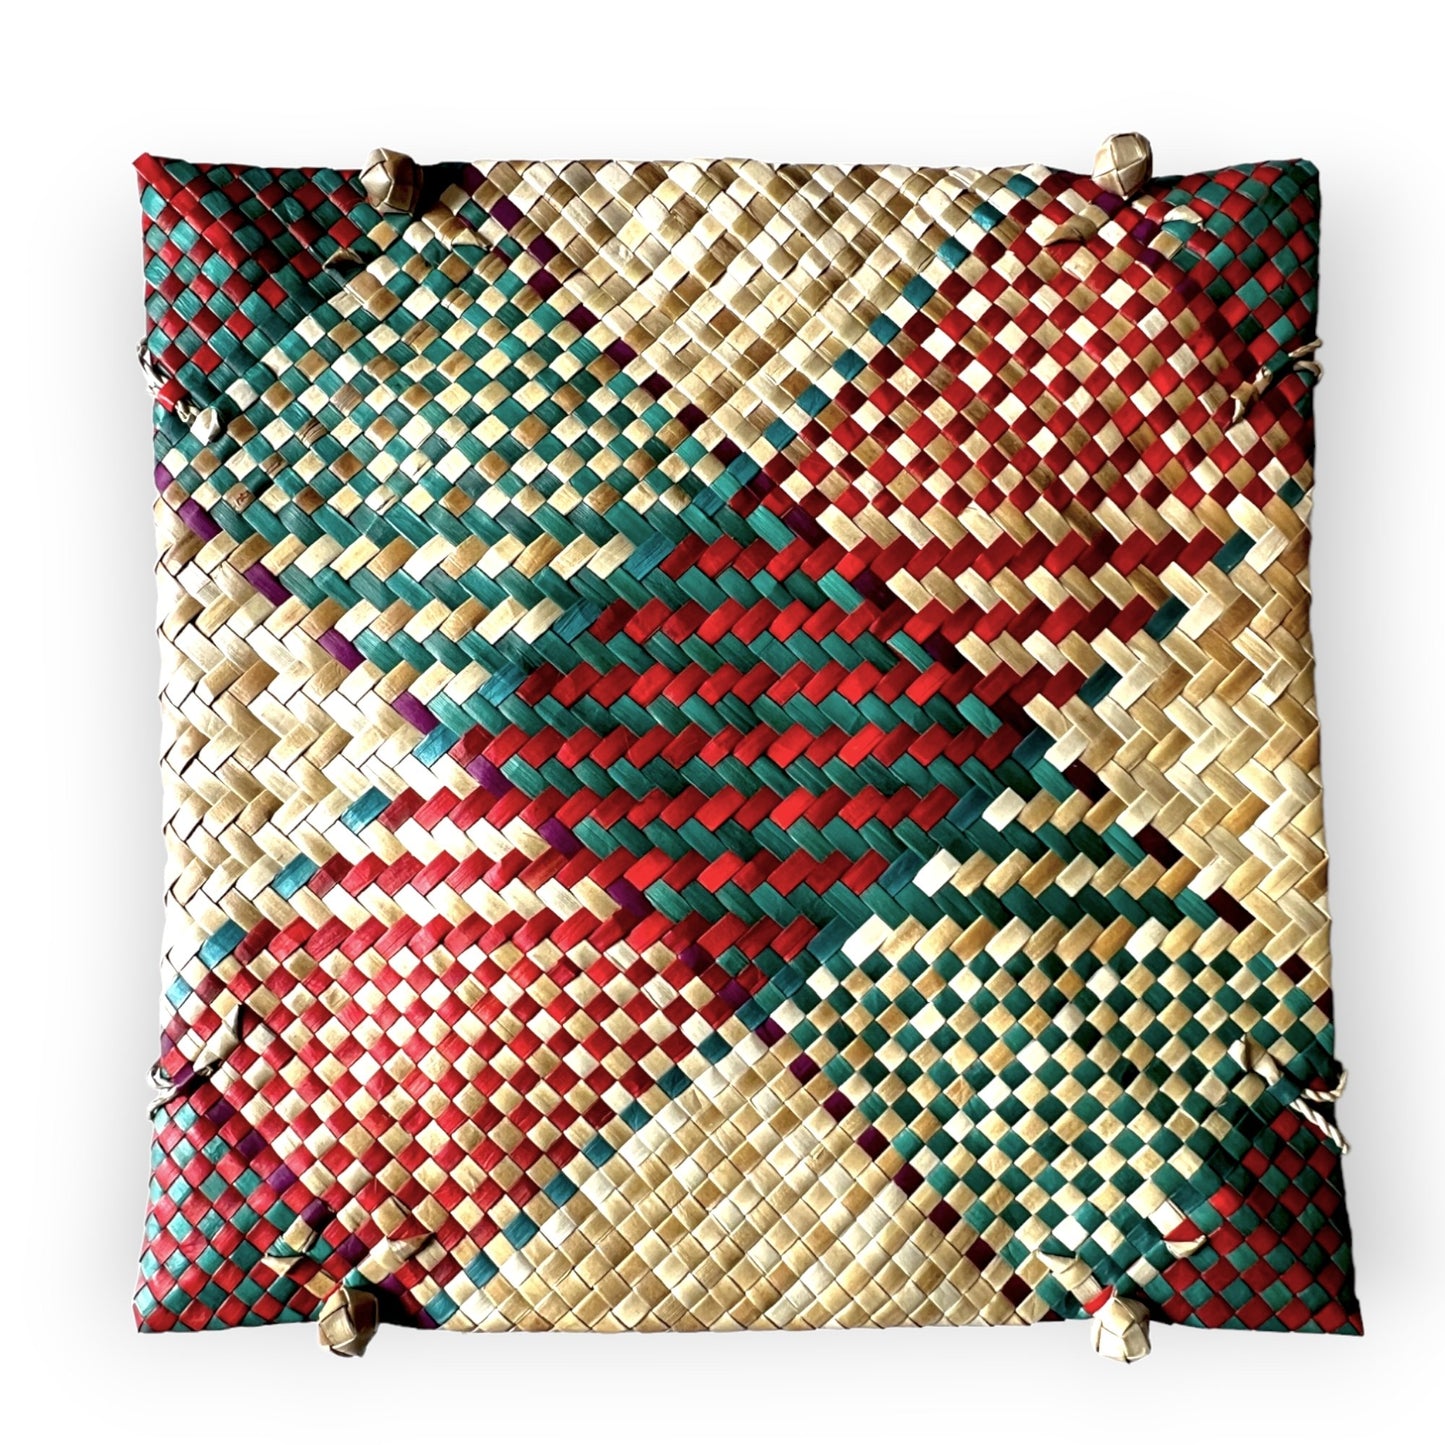 Trio of colorful handwoven fiber nested baskets - Sundara Joon